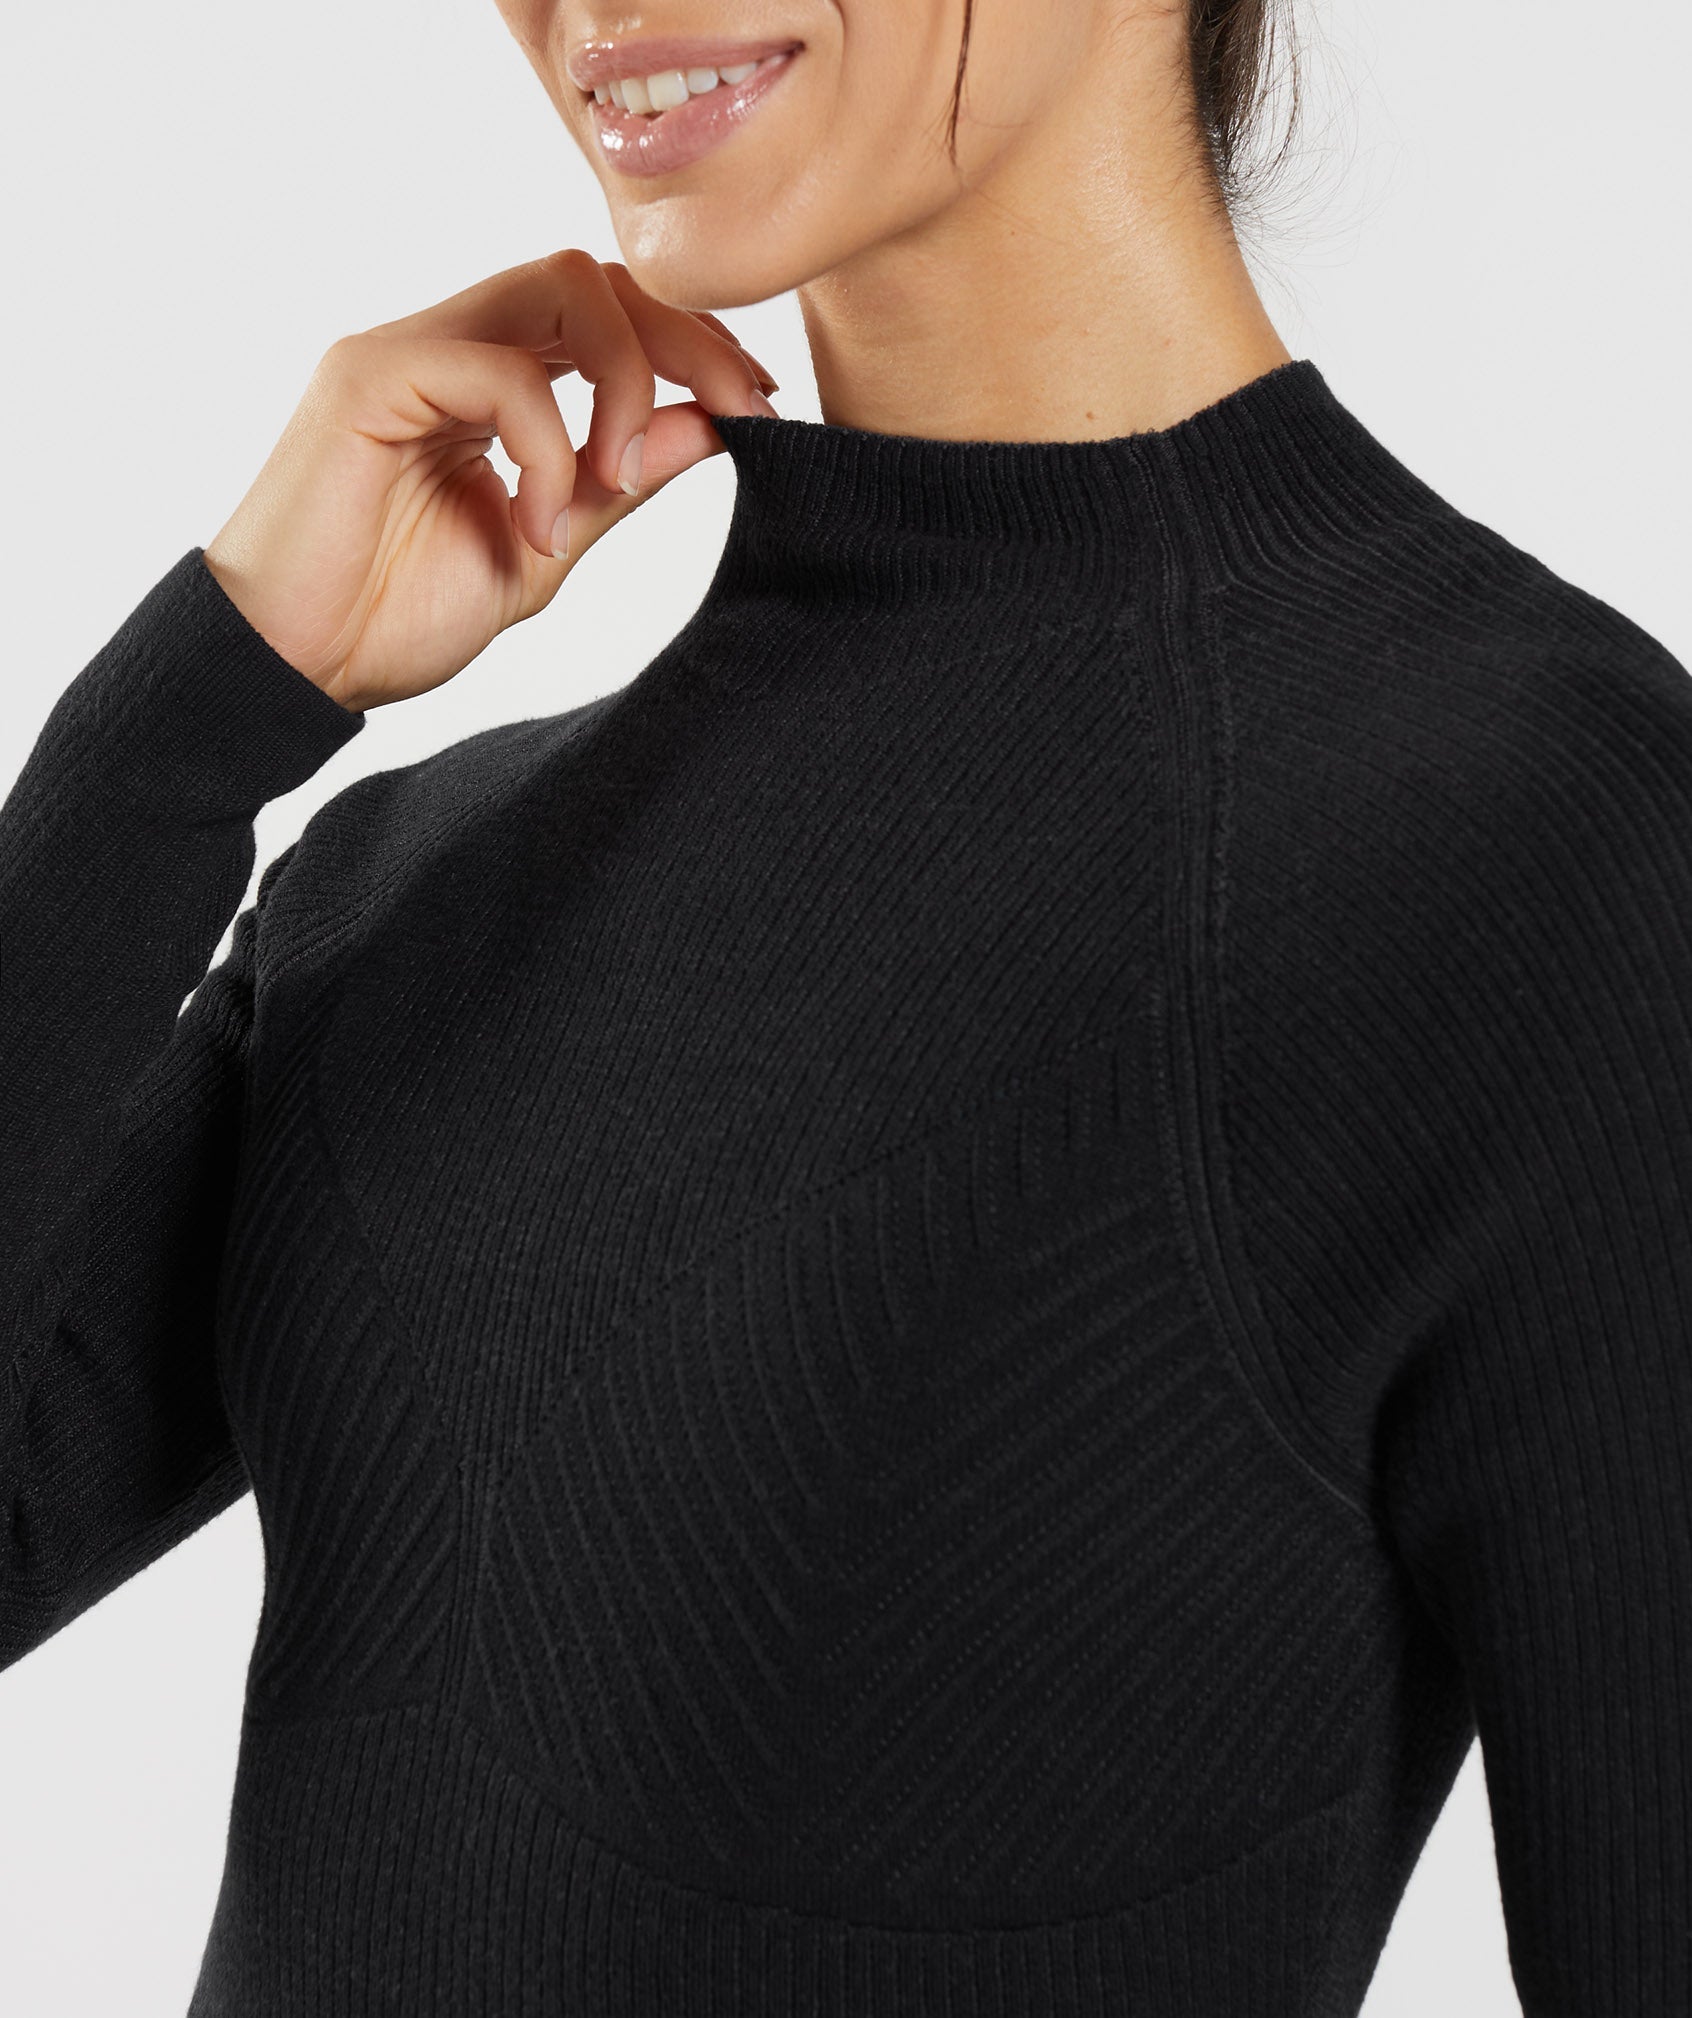 Pause Knitwear Long Sleeve Top in Black/Onyx Grey - view 7